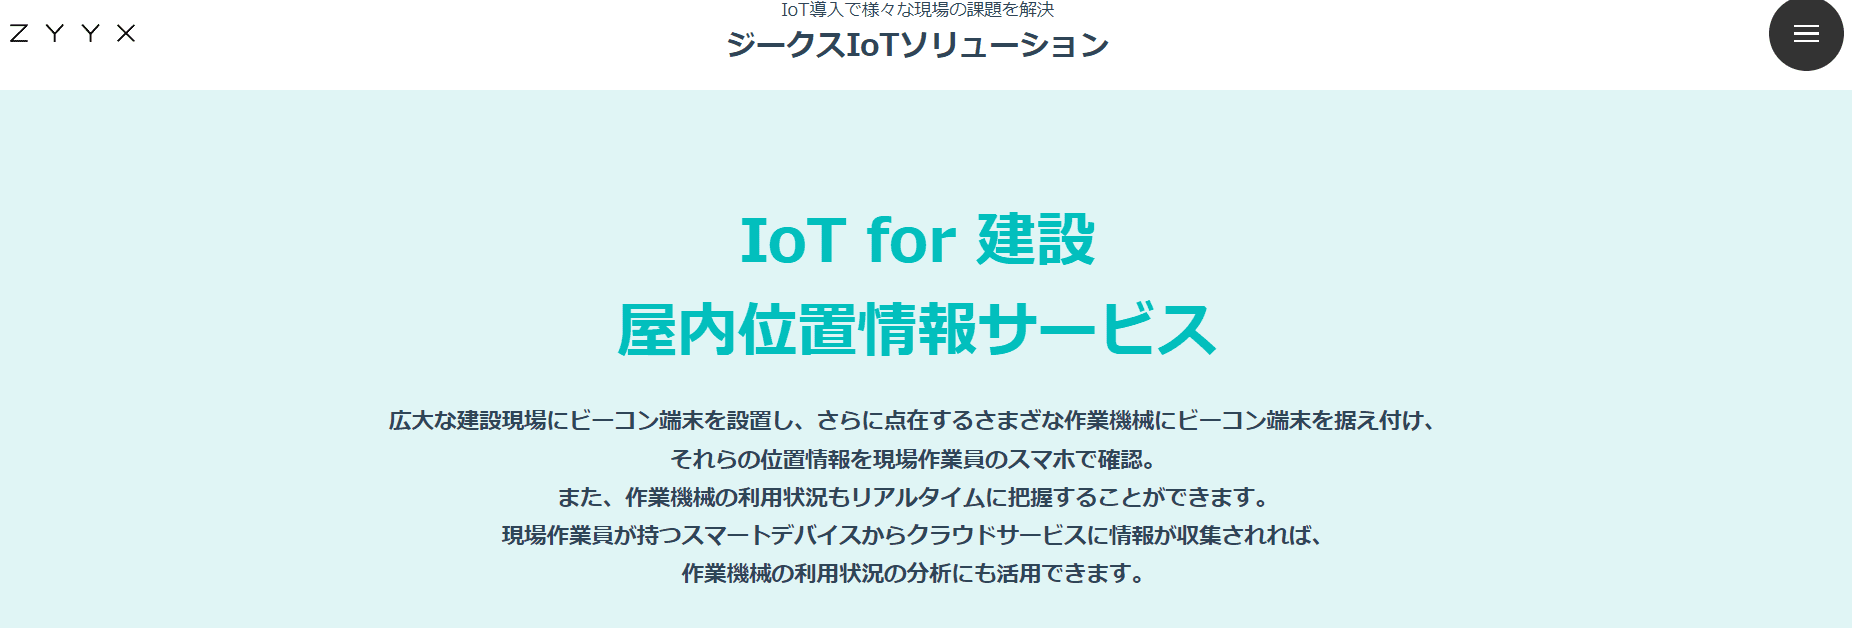 IoT for 建設 屋内位置情報サービス